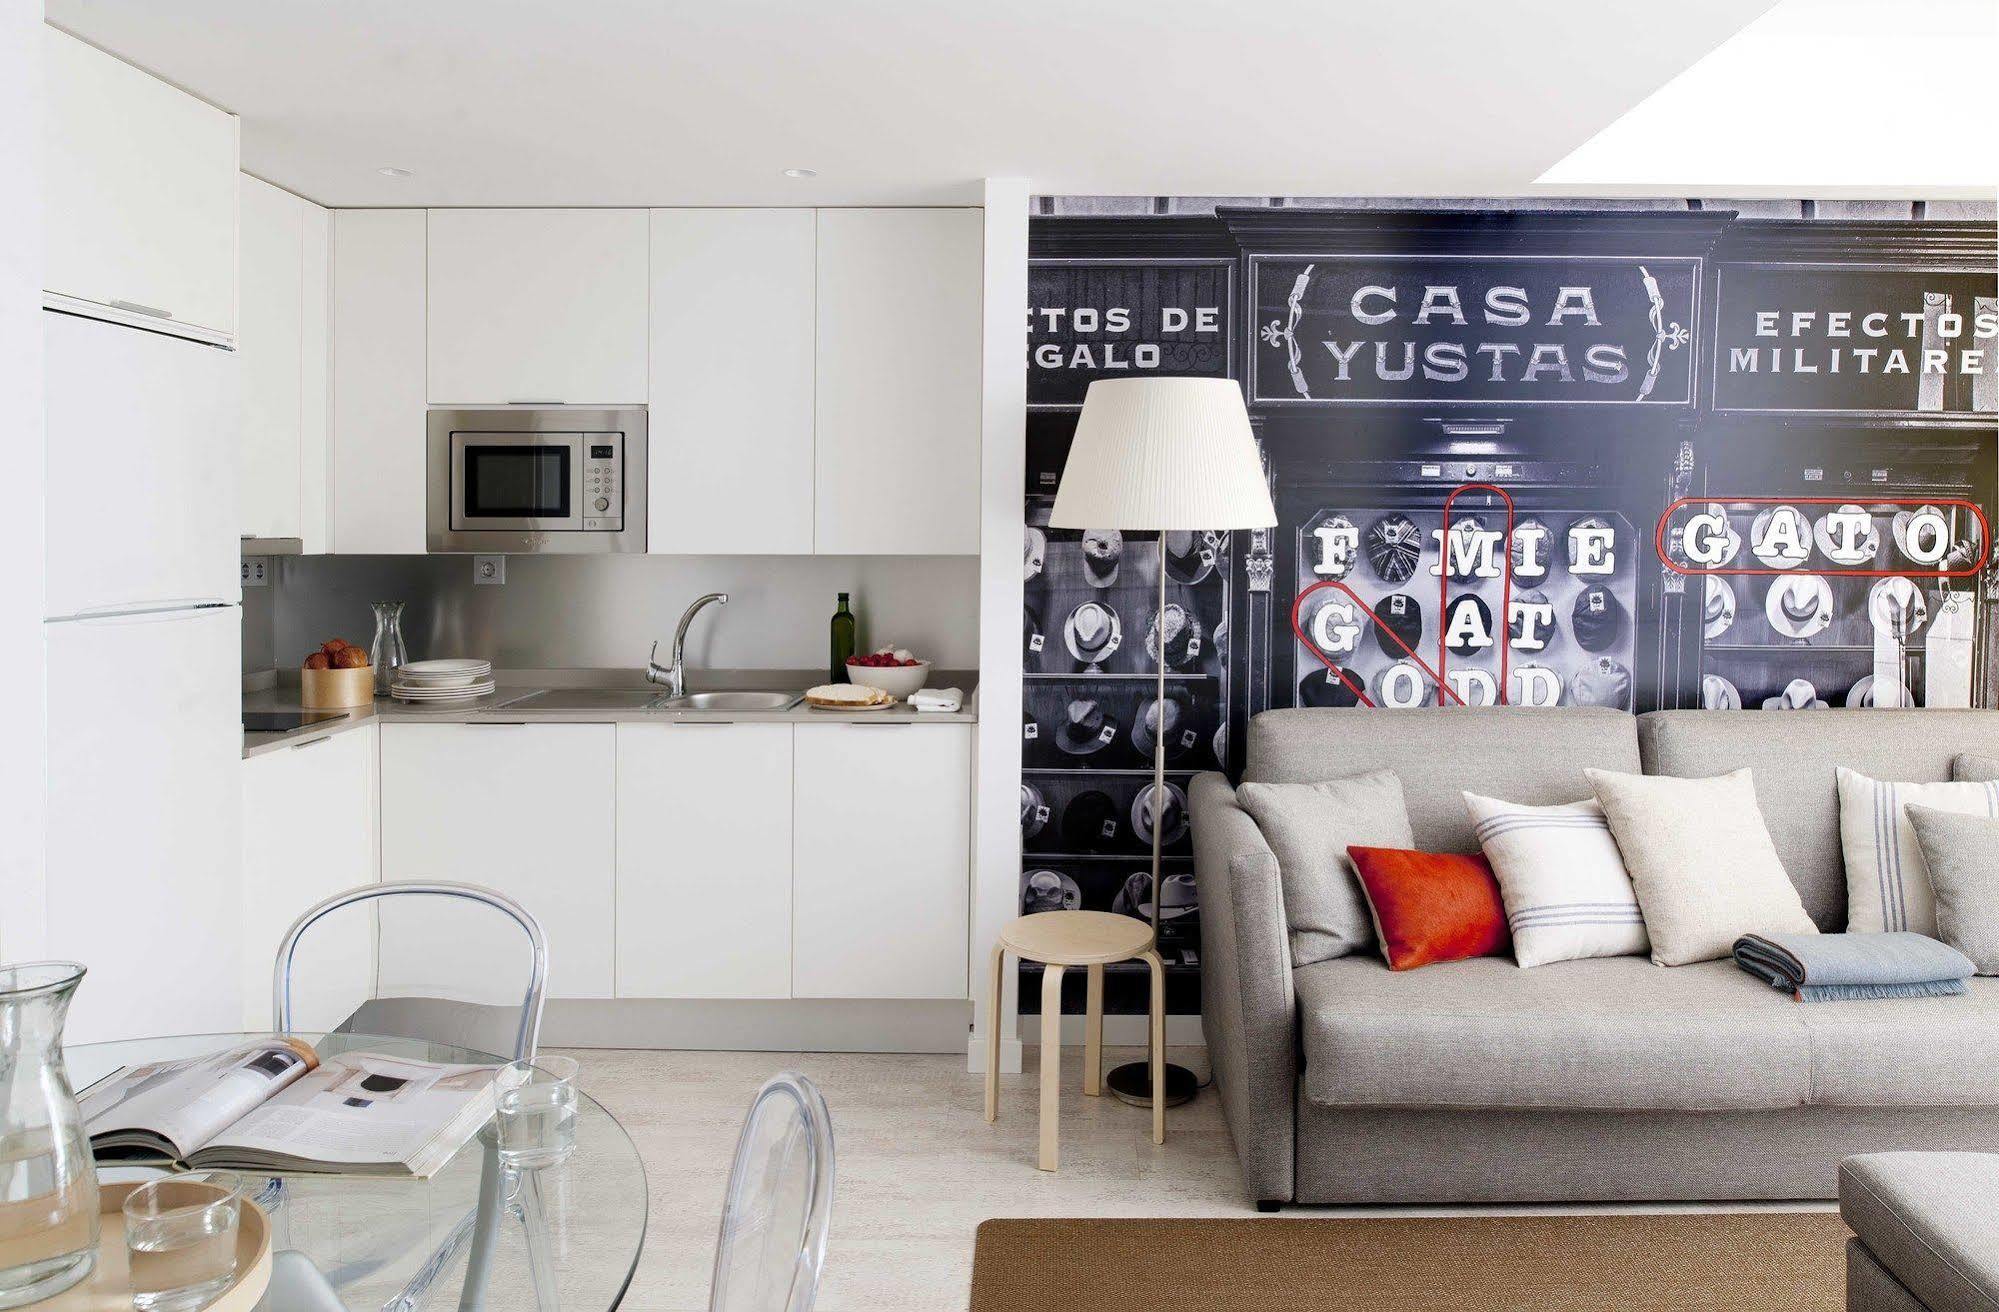 Eric Vokel Boutique Apartments - Atocha Suites Madrid Esterno foto